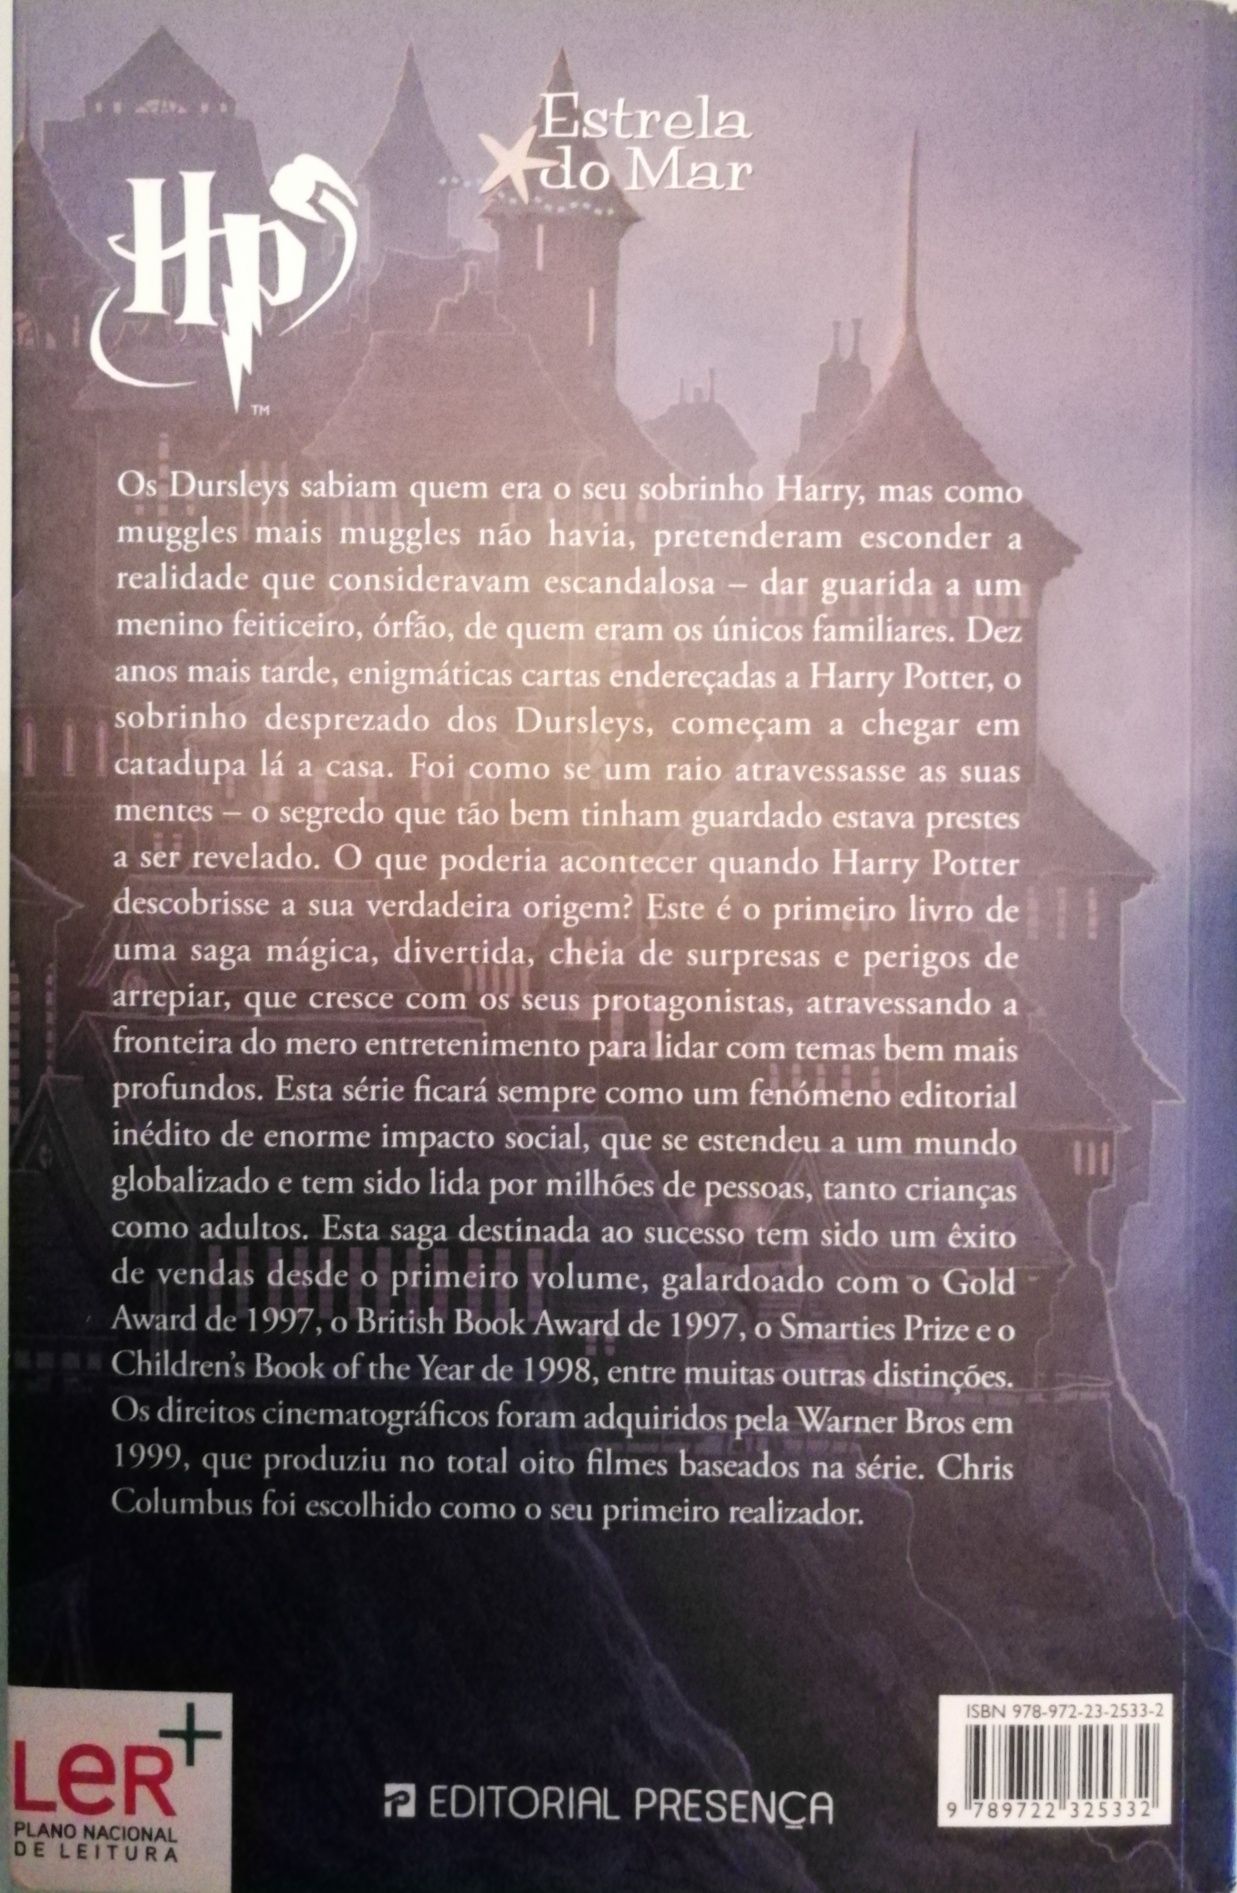 Livro "Harry Potter e a Pedra Filosofal", J. K. Rowling